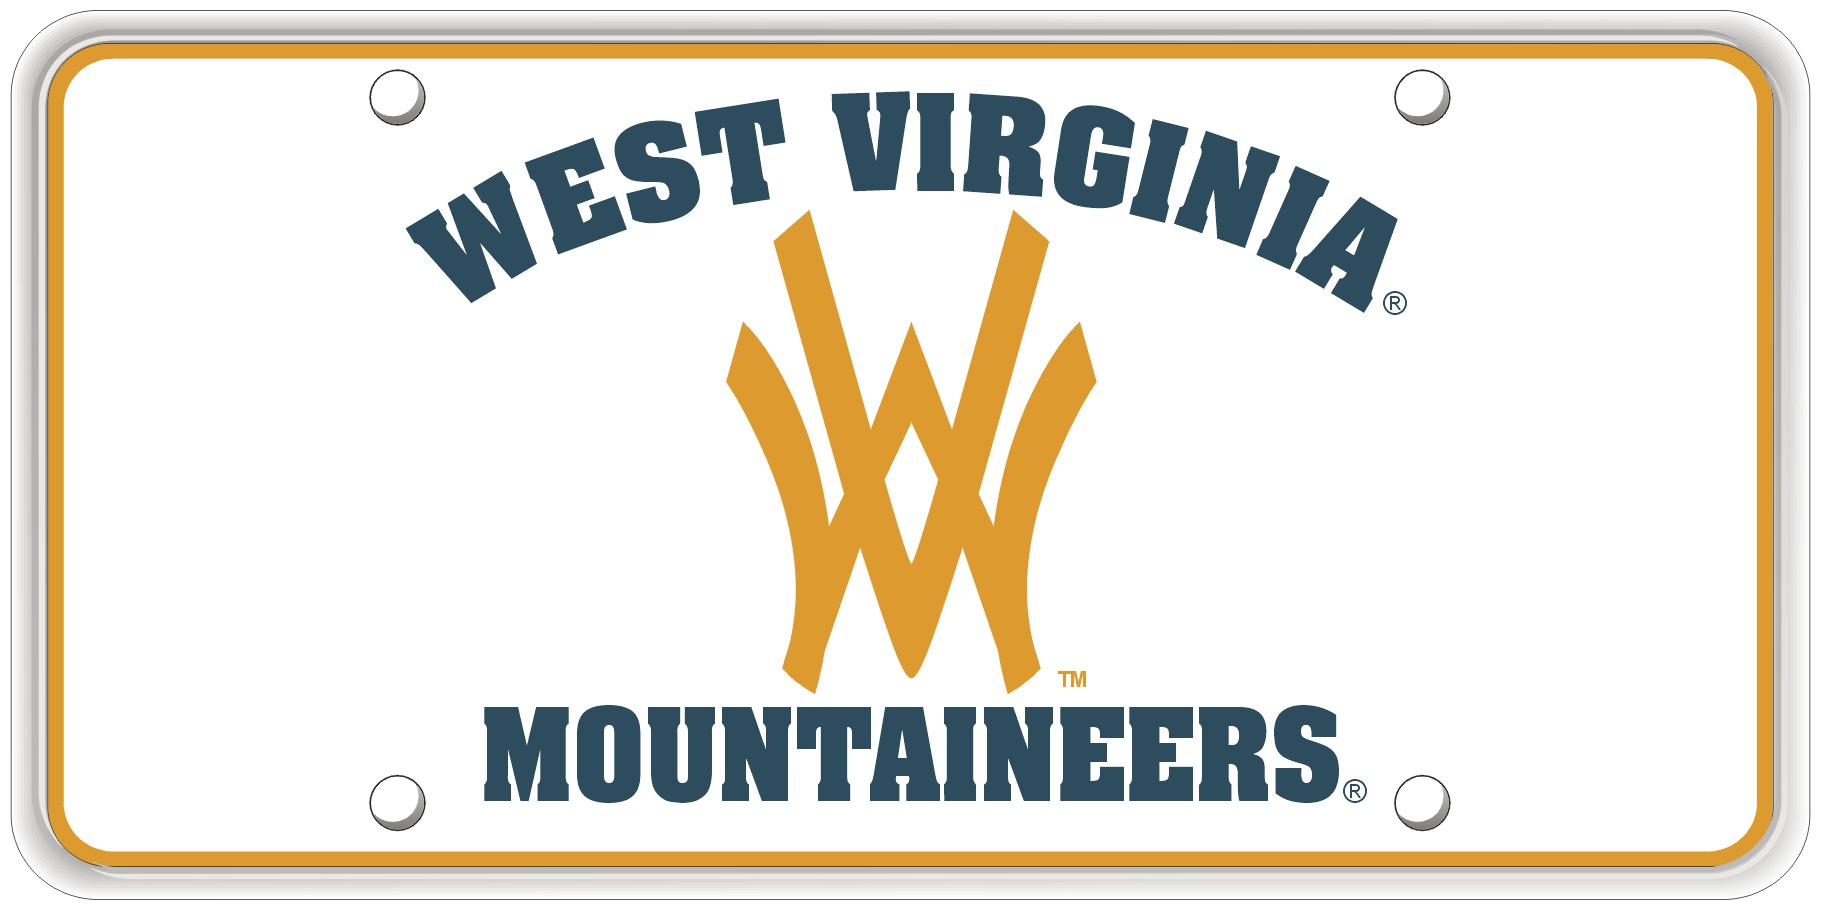 West Virginia Mountaineers